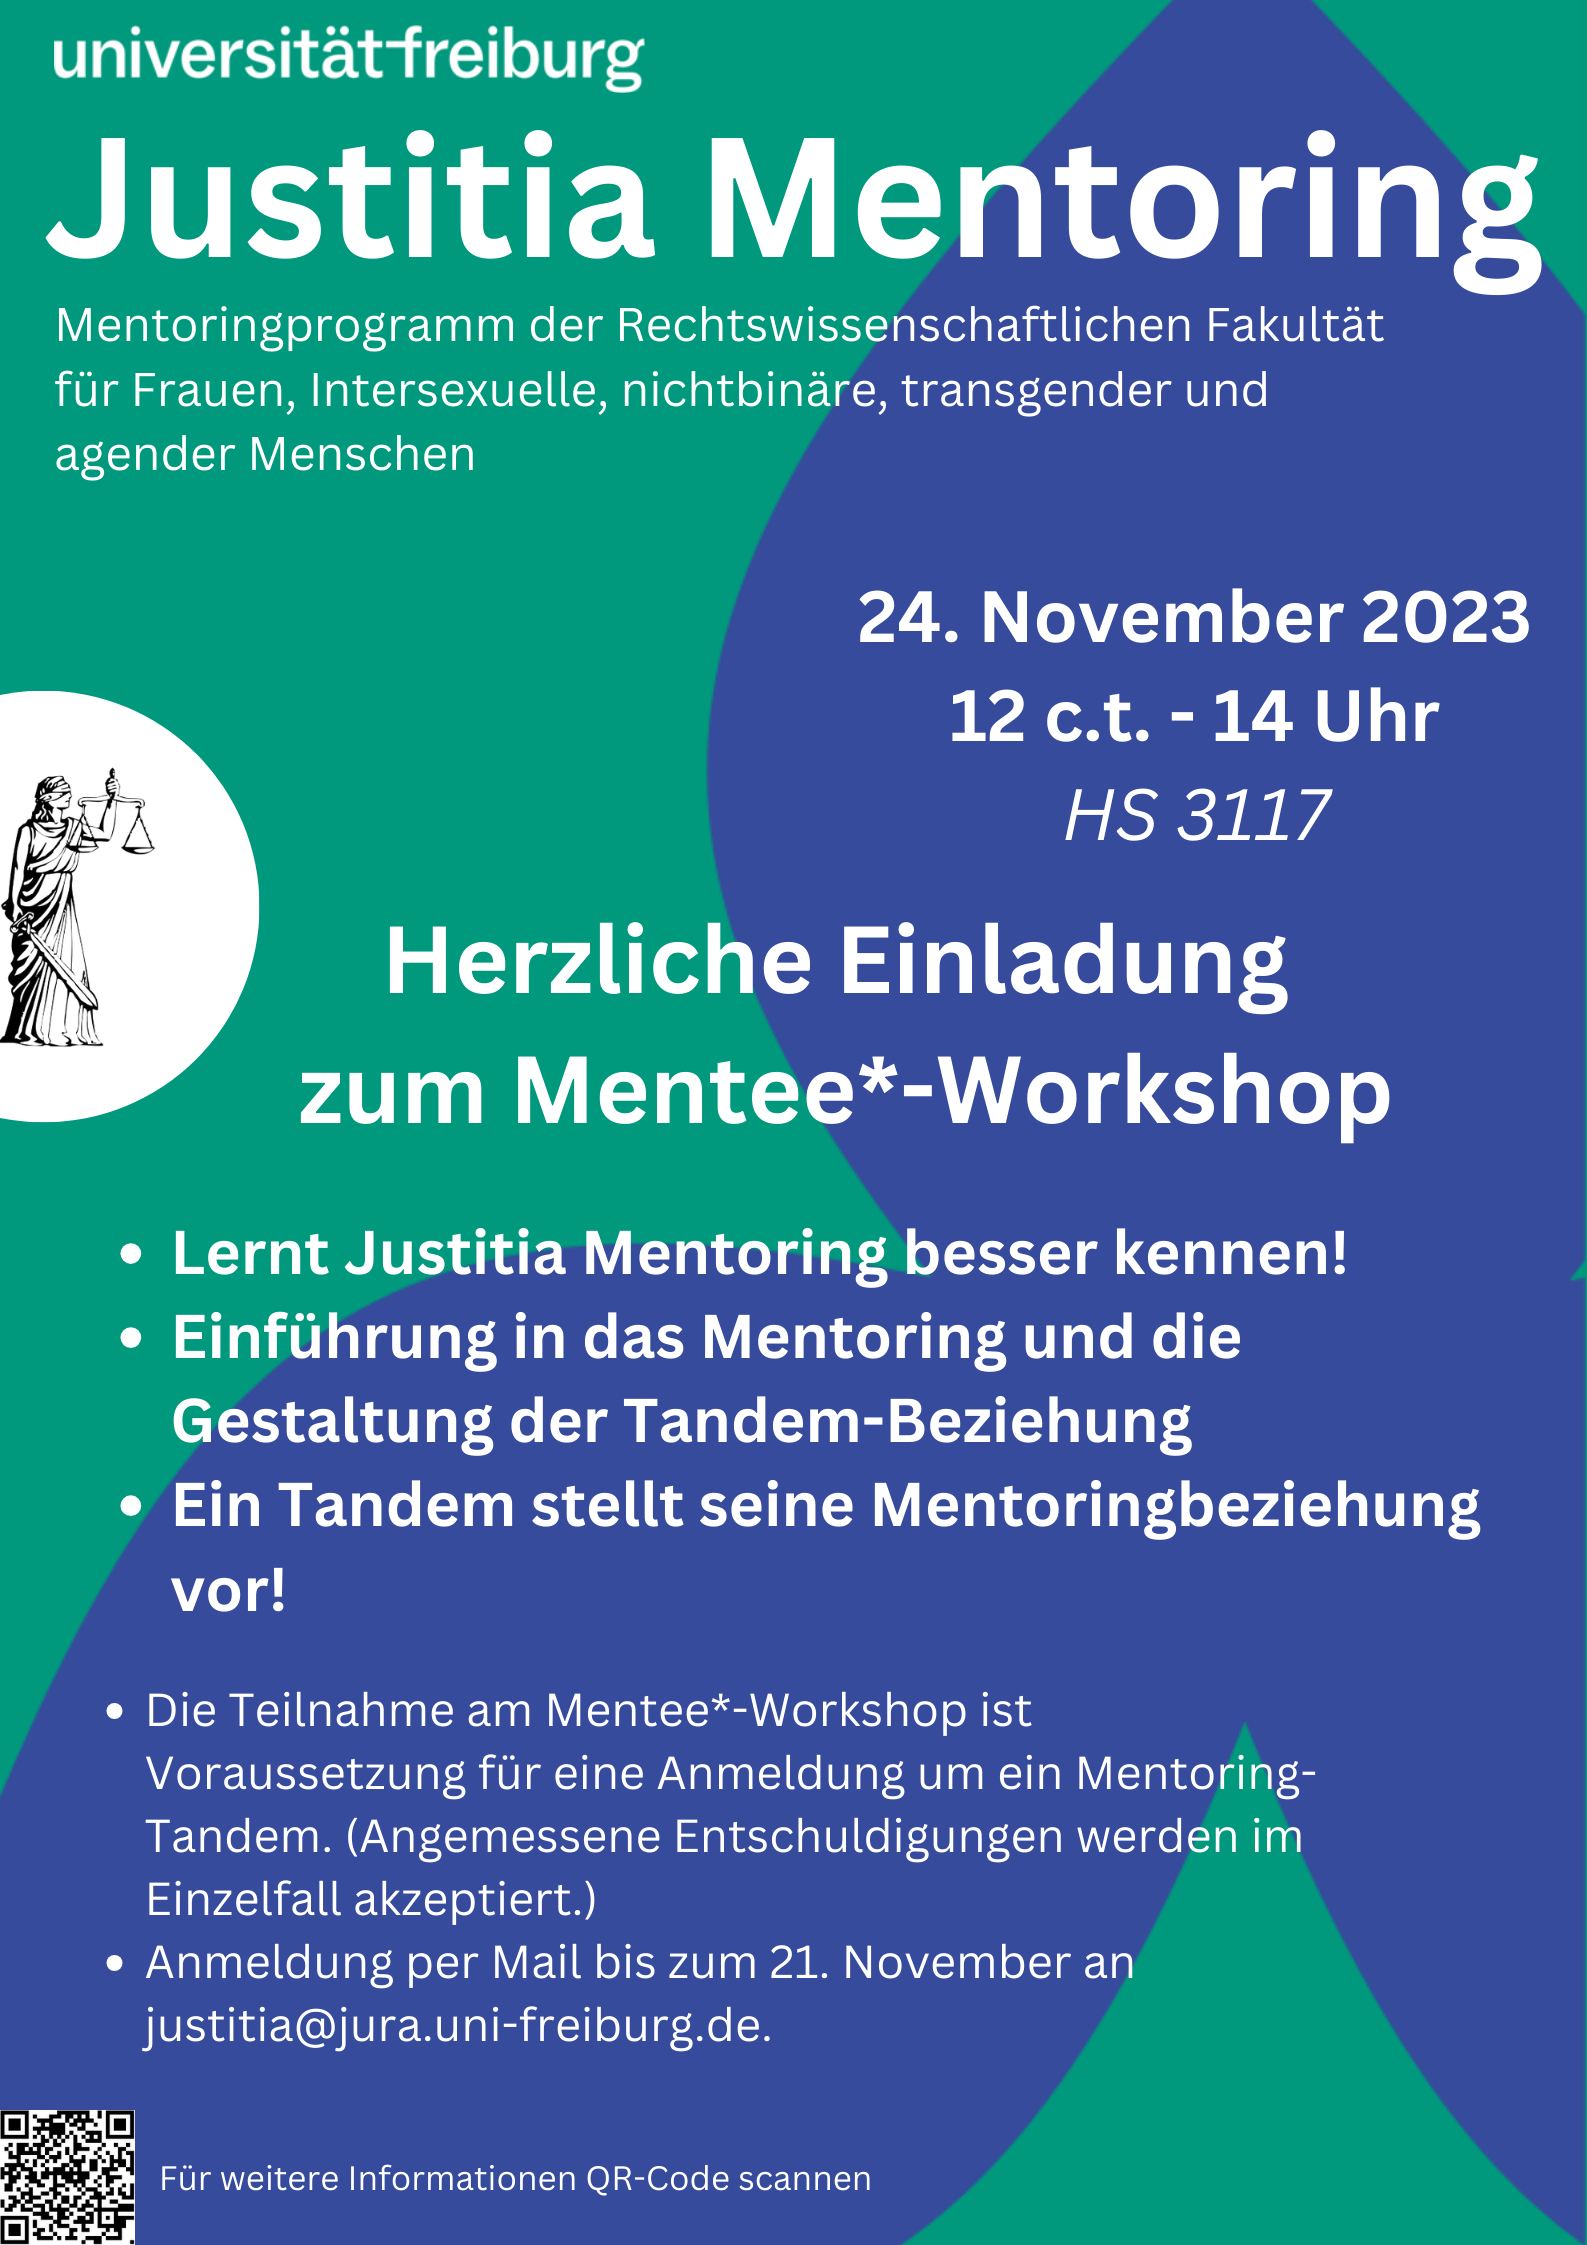 Justitia Mentoring: Mentee*-Workshop am 24. November 2023